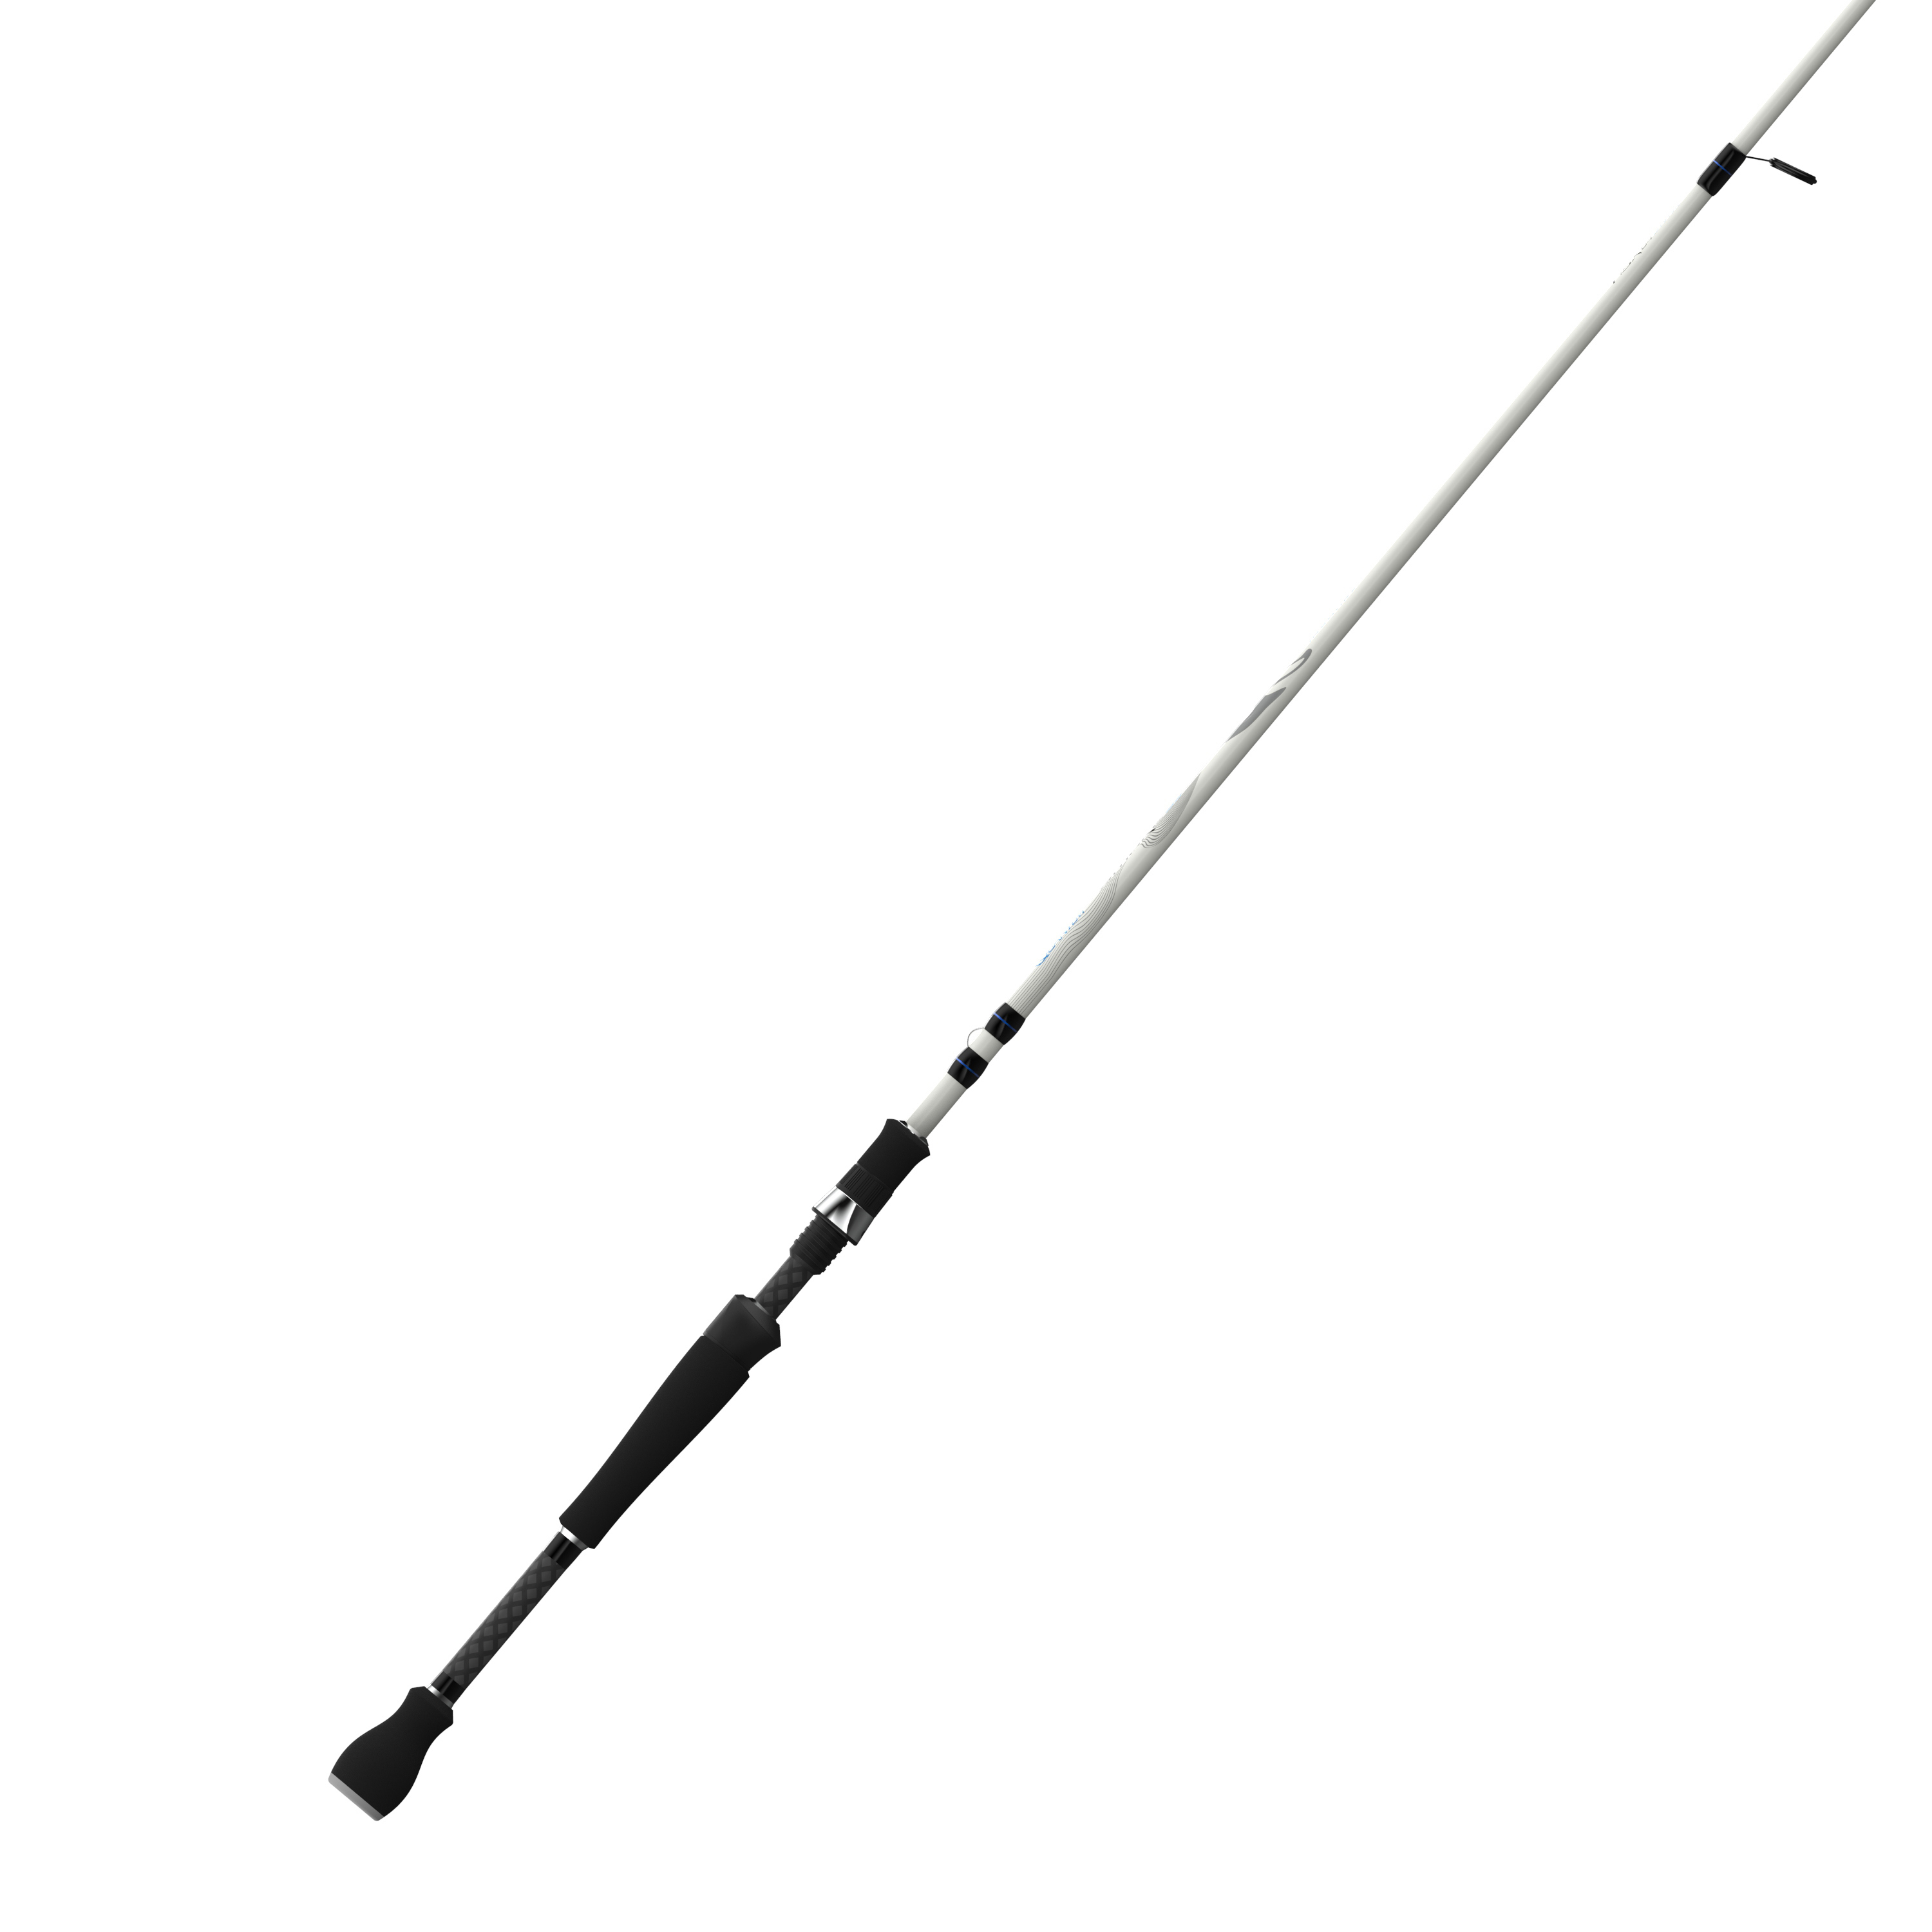 Smoke - Rod, Quantum Fishing, Quality Fishing Gear